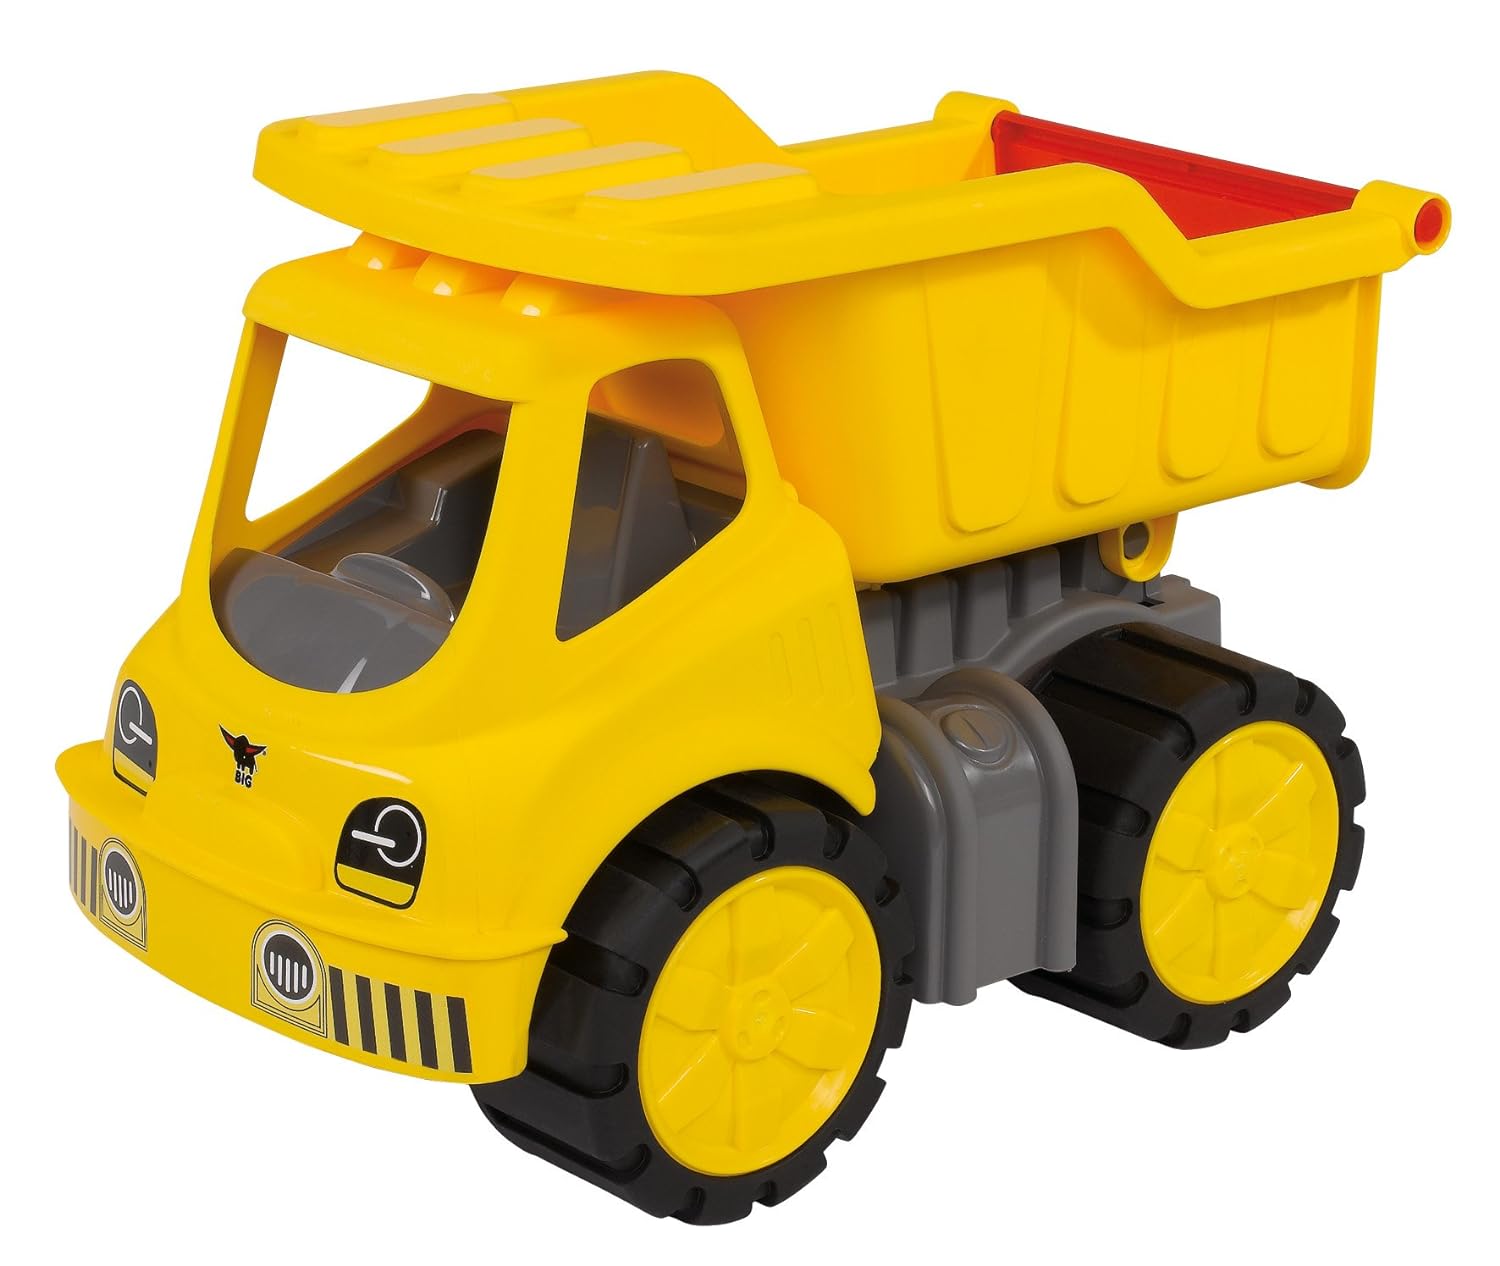 BIG 56836 - Power Worker Kipper, gelb